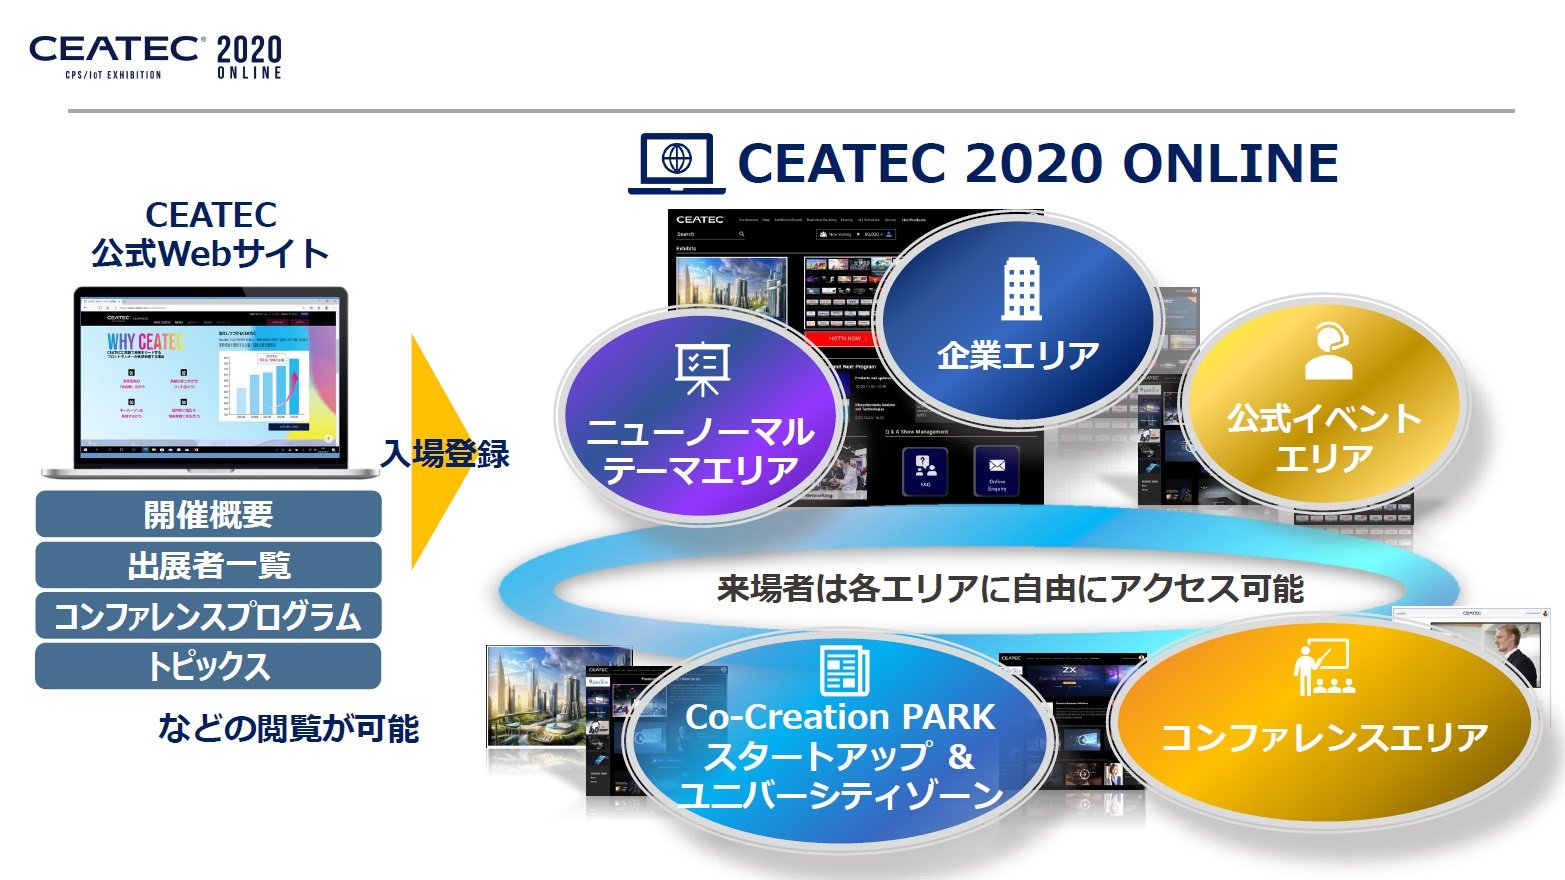 CEATEC 2020 ONLINE̊Tv@oTFCEATEC{c